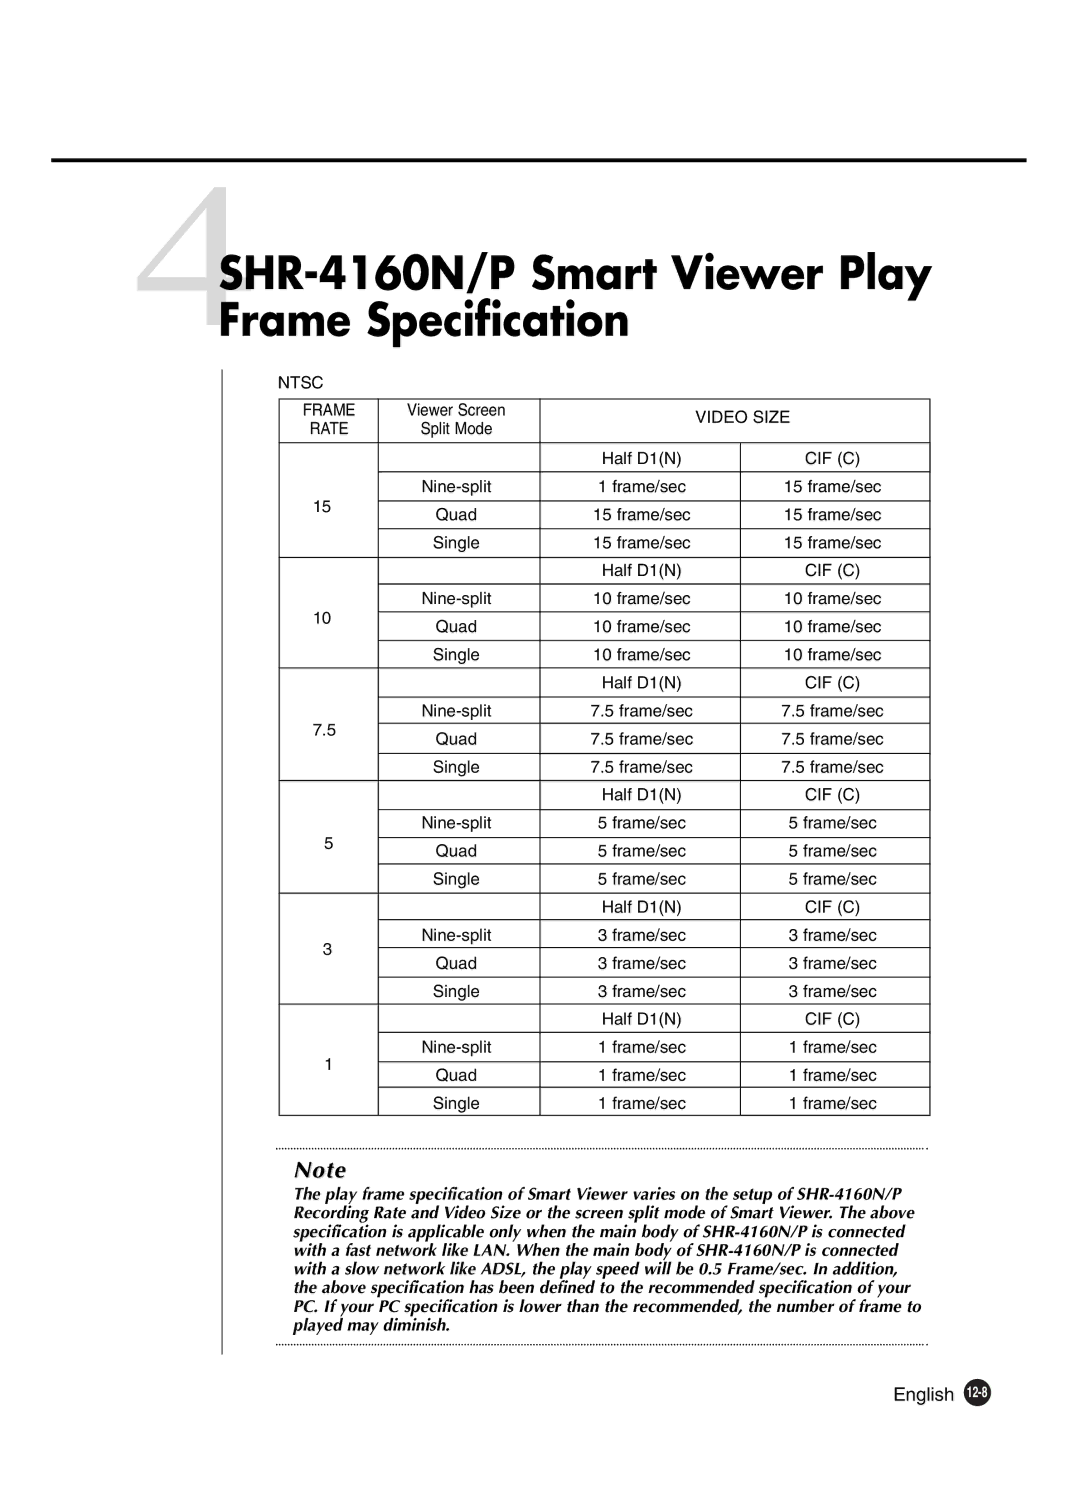 Samsung SHR-4160P manual 4SHRFrame-4160N/PSpecificationSmart Viewer Play 